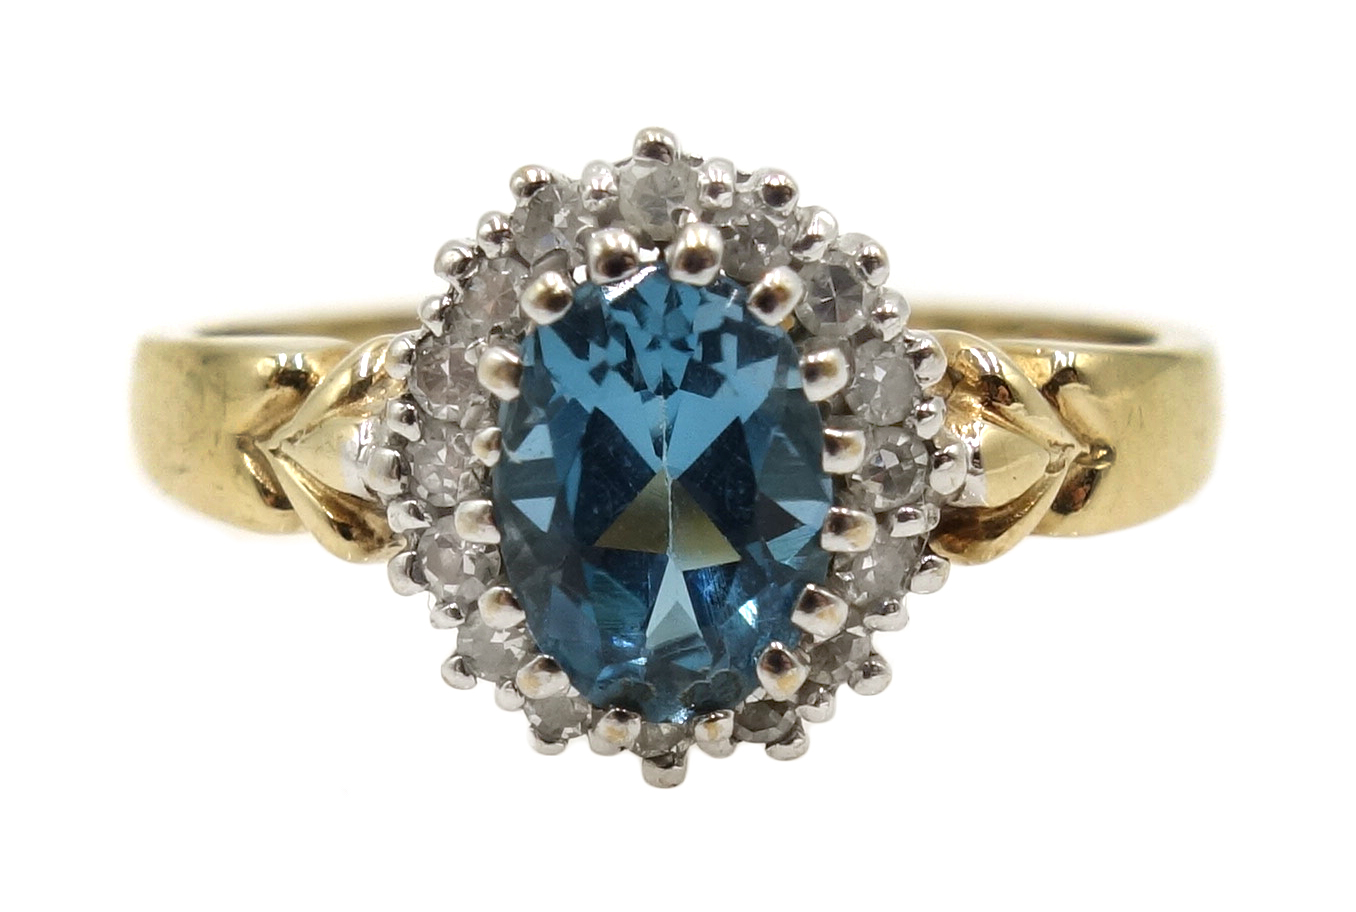 Gold blue topaz and diamond pendant necklace and oval blue topaz and diamond ring, - Image 3 of 4